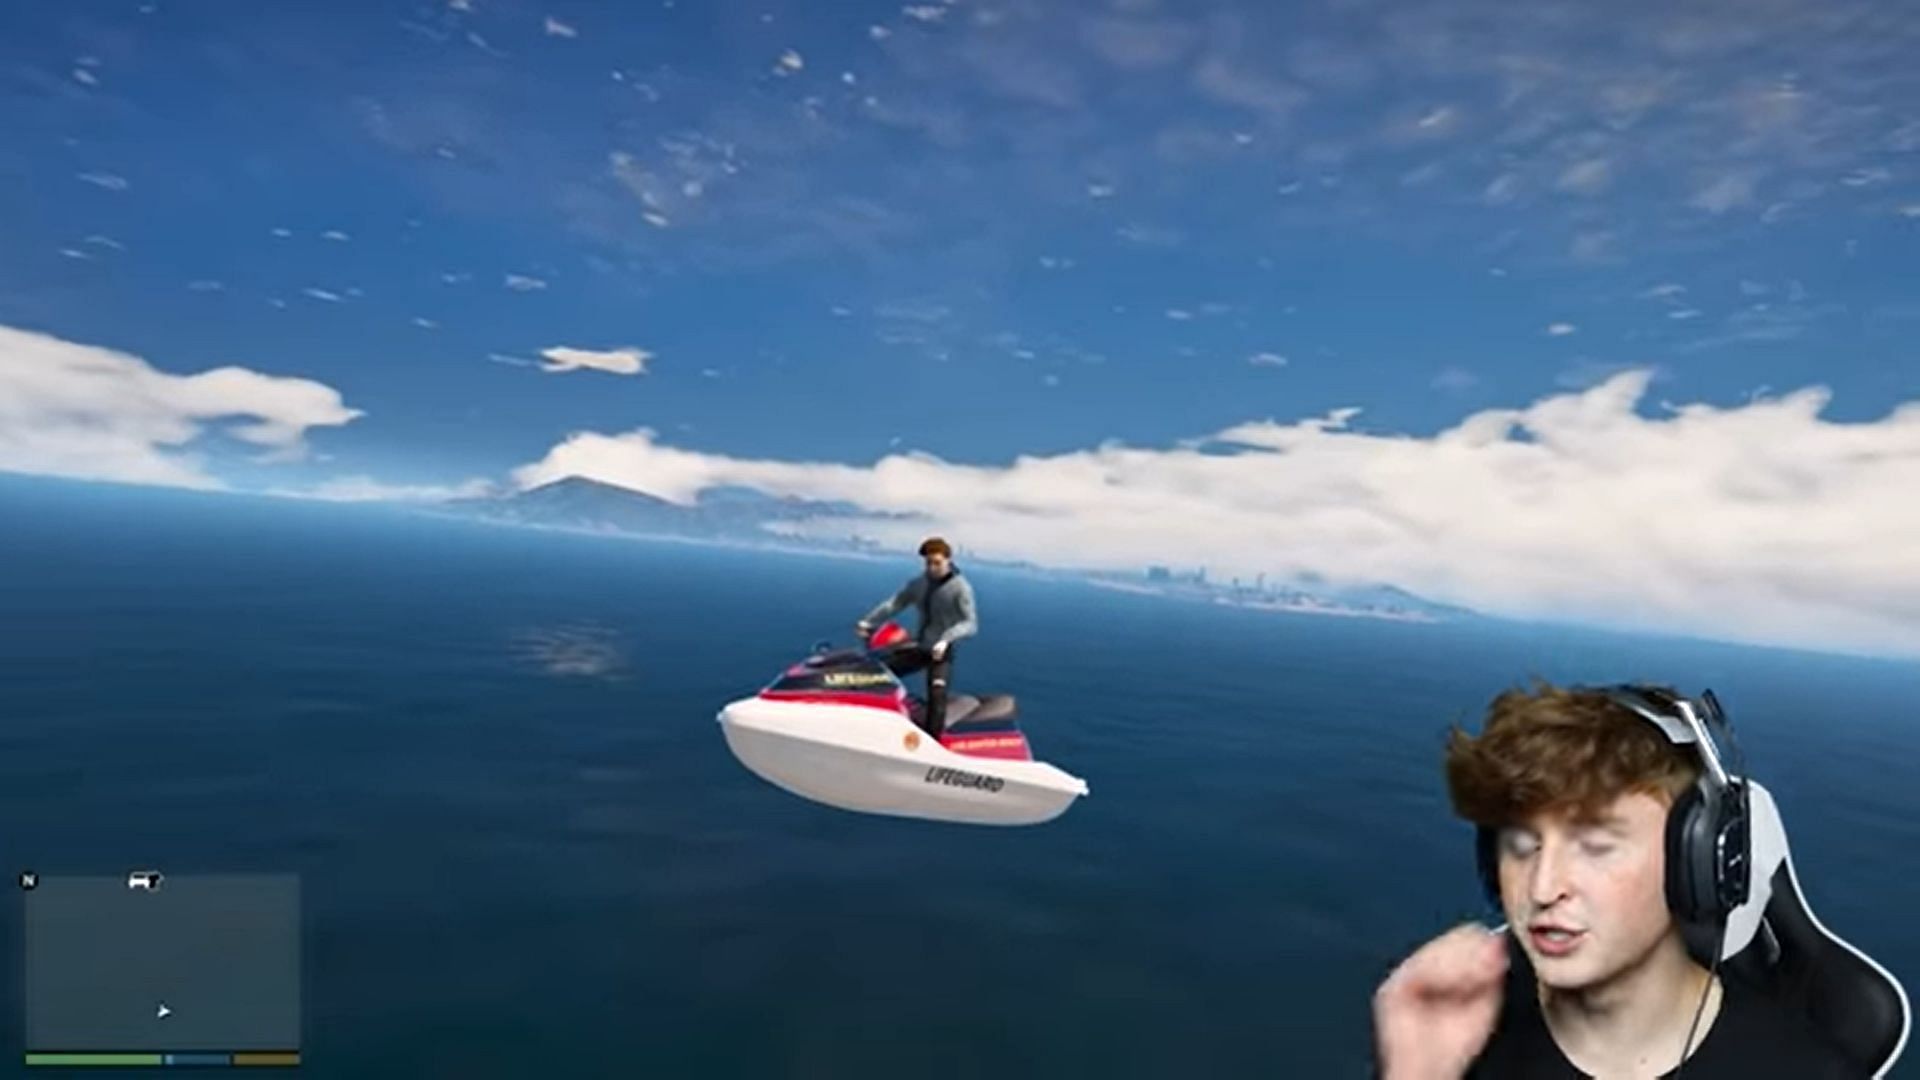 Taking off on his GTA 5 modded jet ski (Image via Sportskeeda)